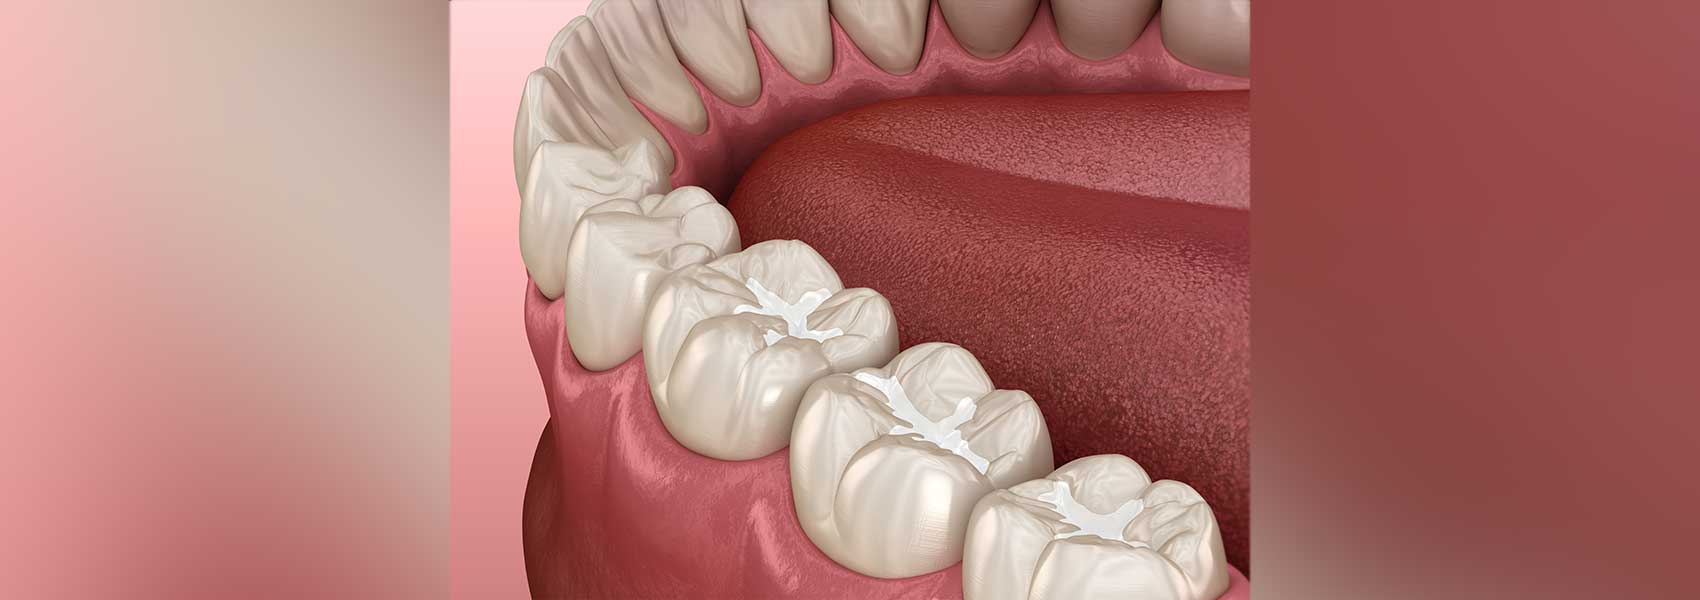 Dental sealants